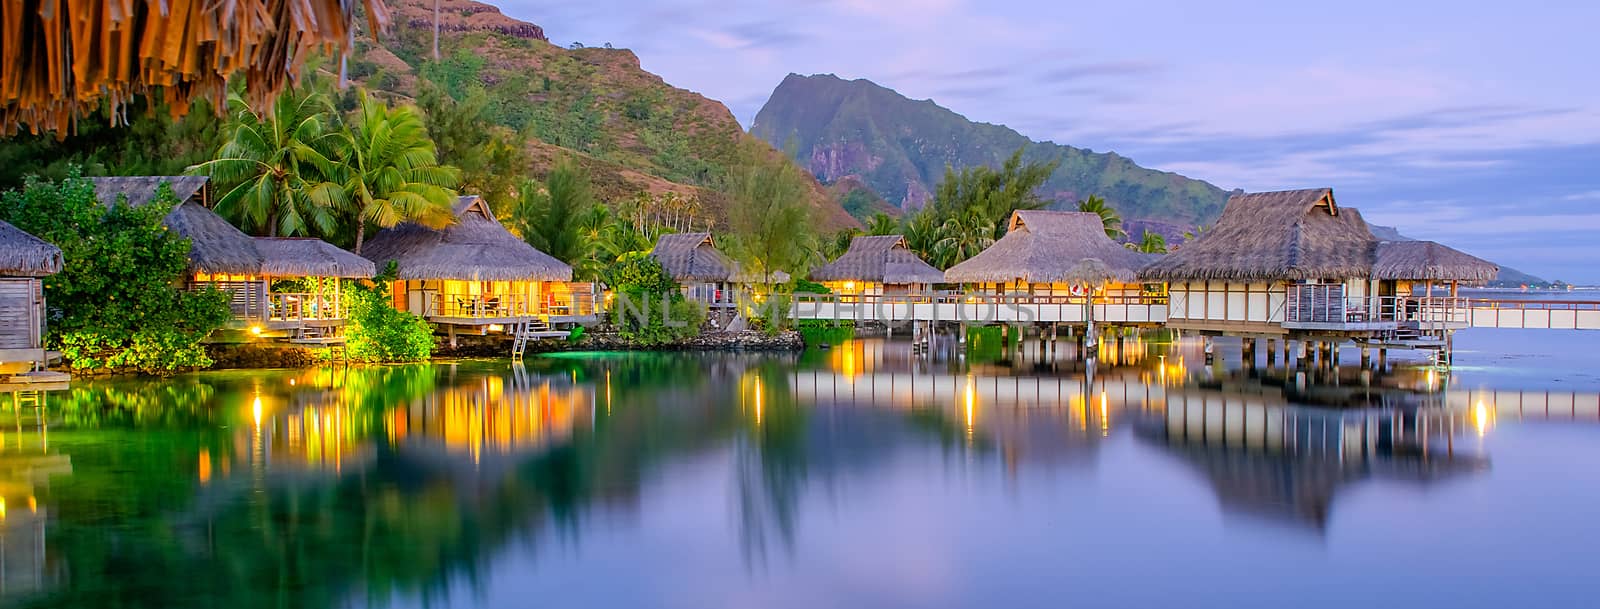 Overwater bungalows, French Polynesia by marcorubino